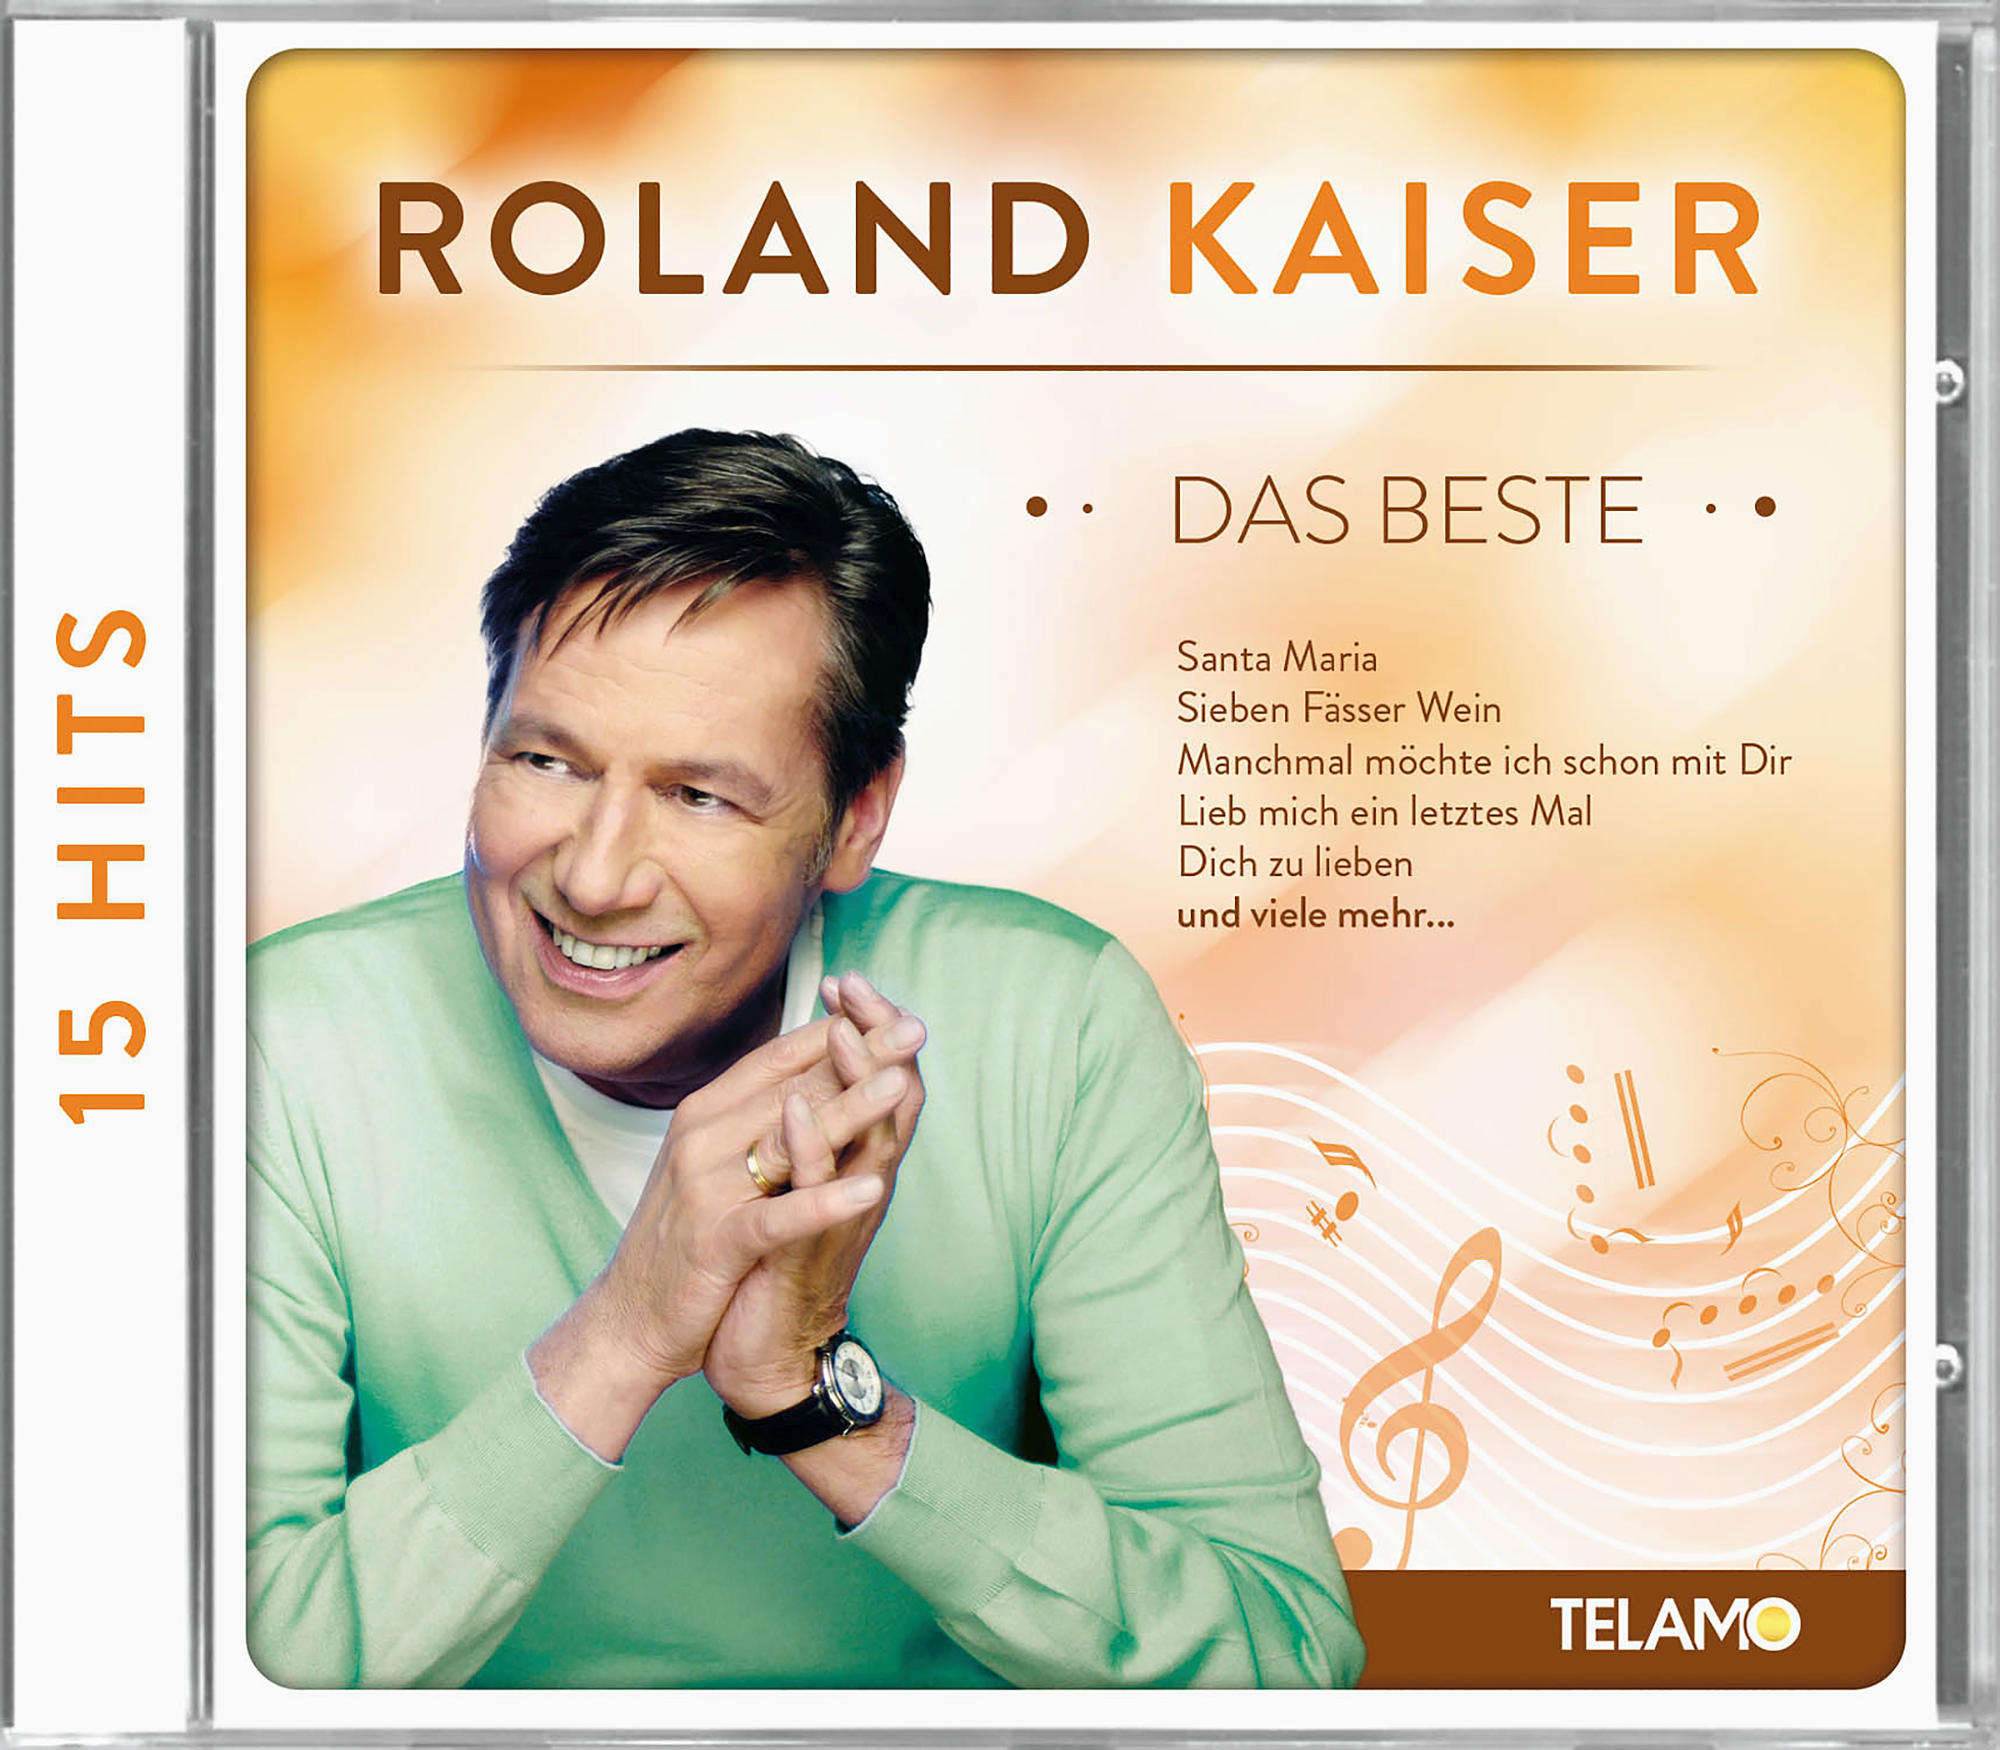 Roland Kaiser - (CD) Hits Beste, 15 Das 